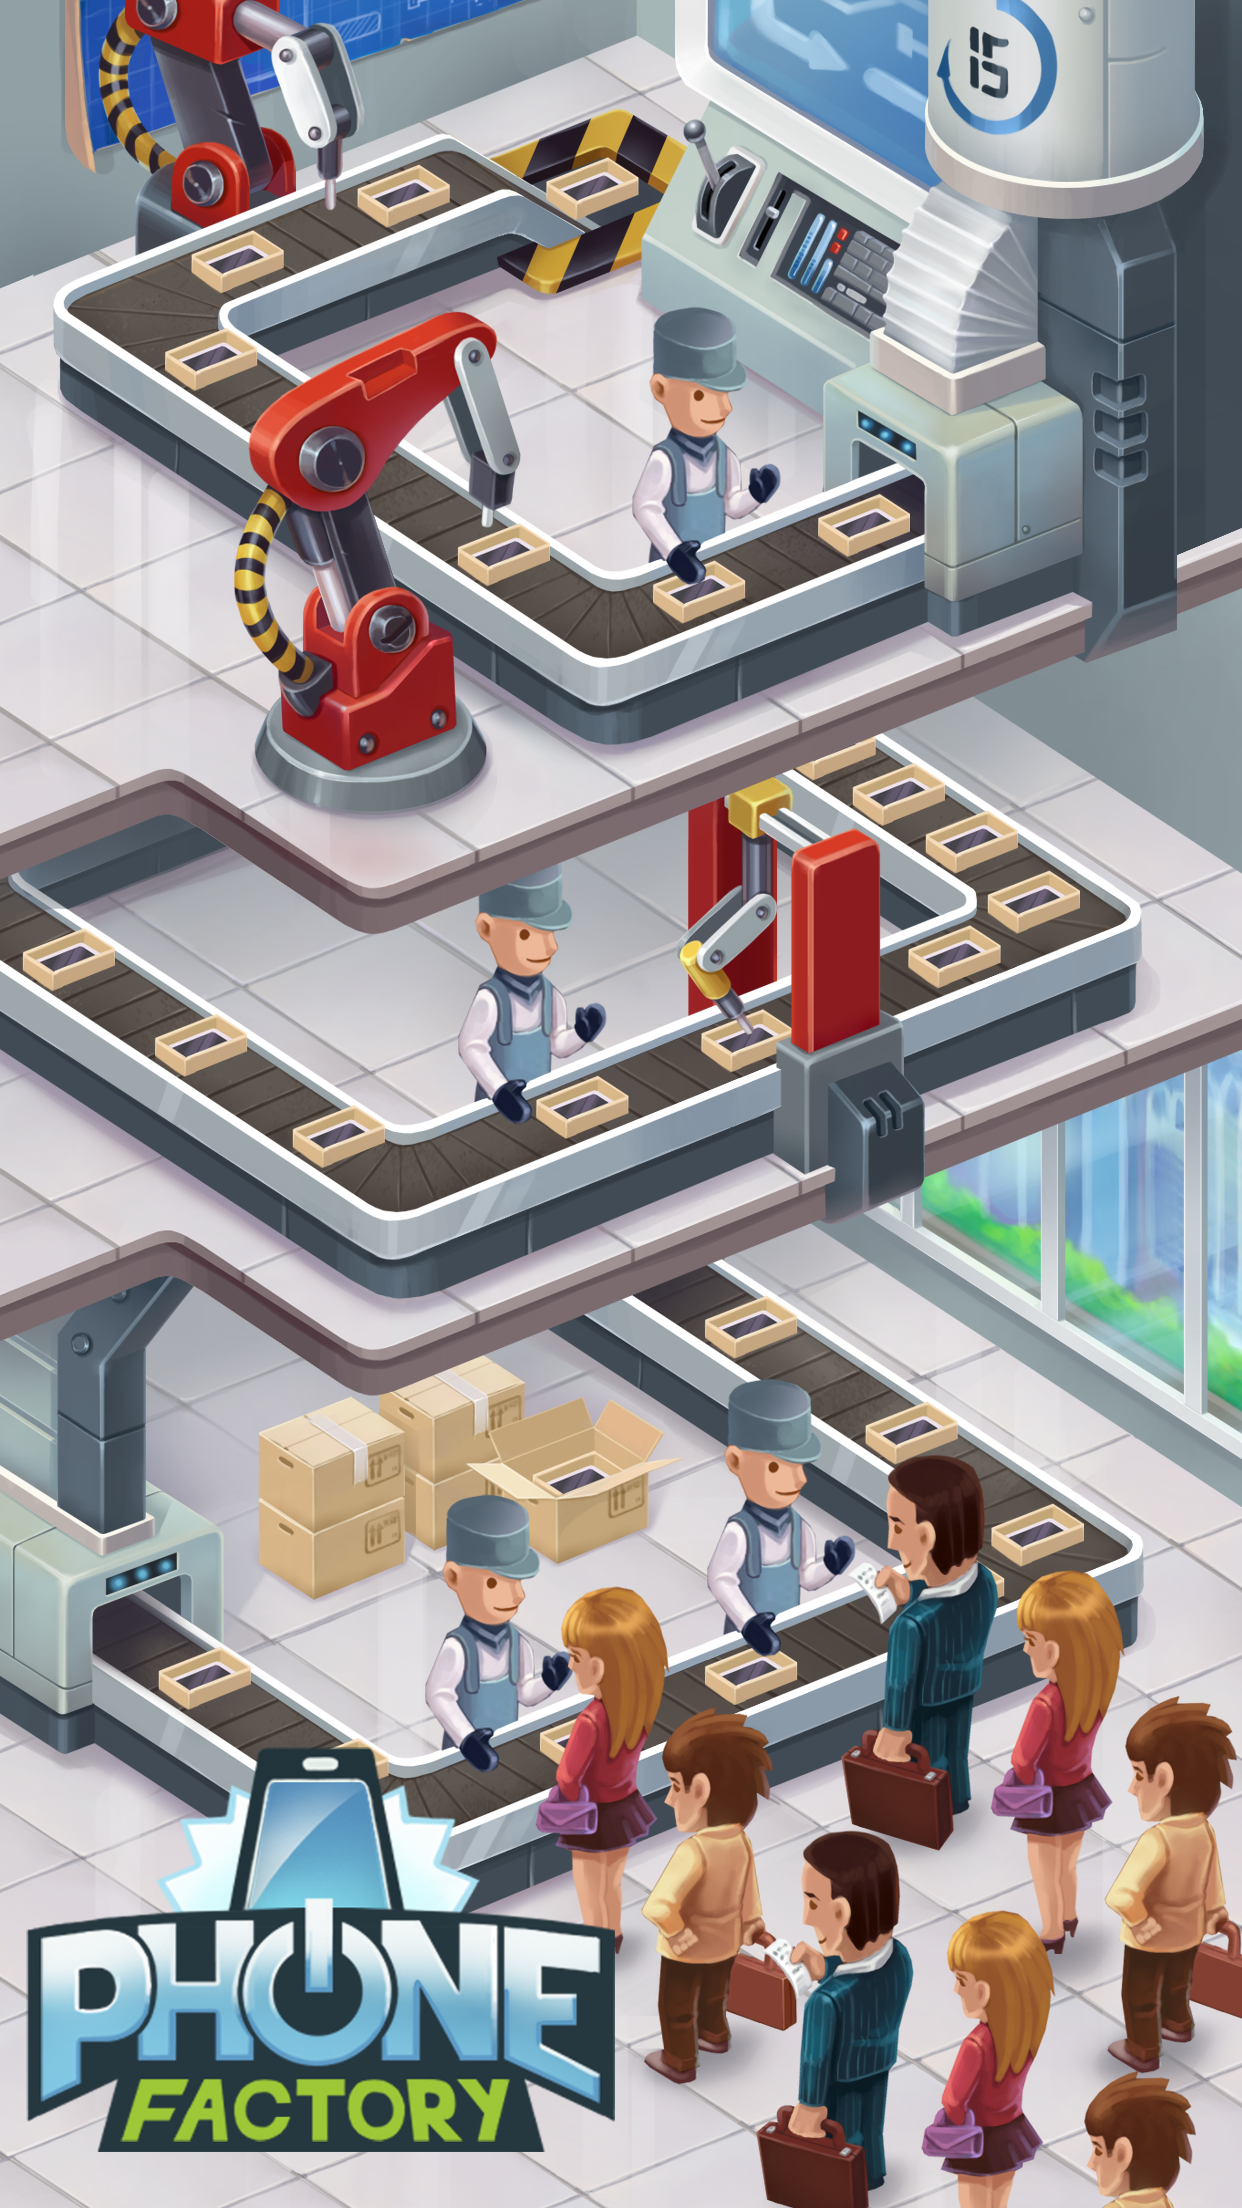 Screenshot 1 of Phone Factory - jeu de création de smartphone inactif 0.8